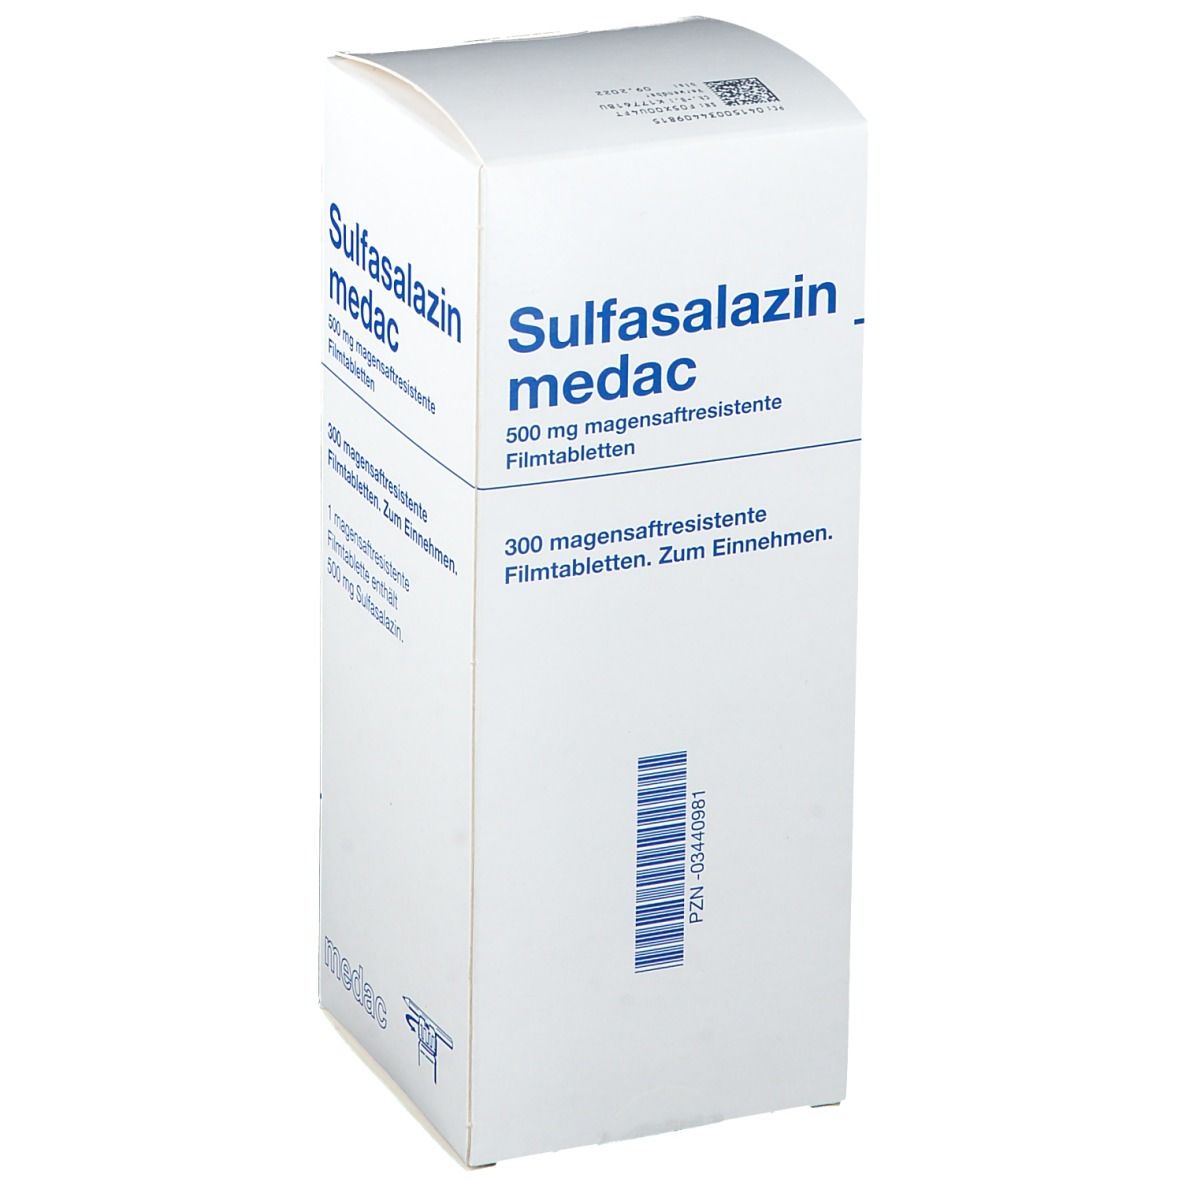 Sulfasalazin medac 500 mg